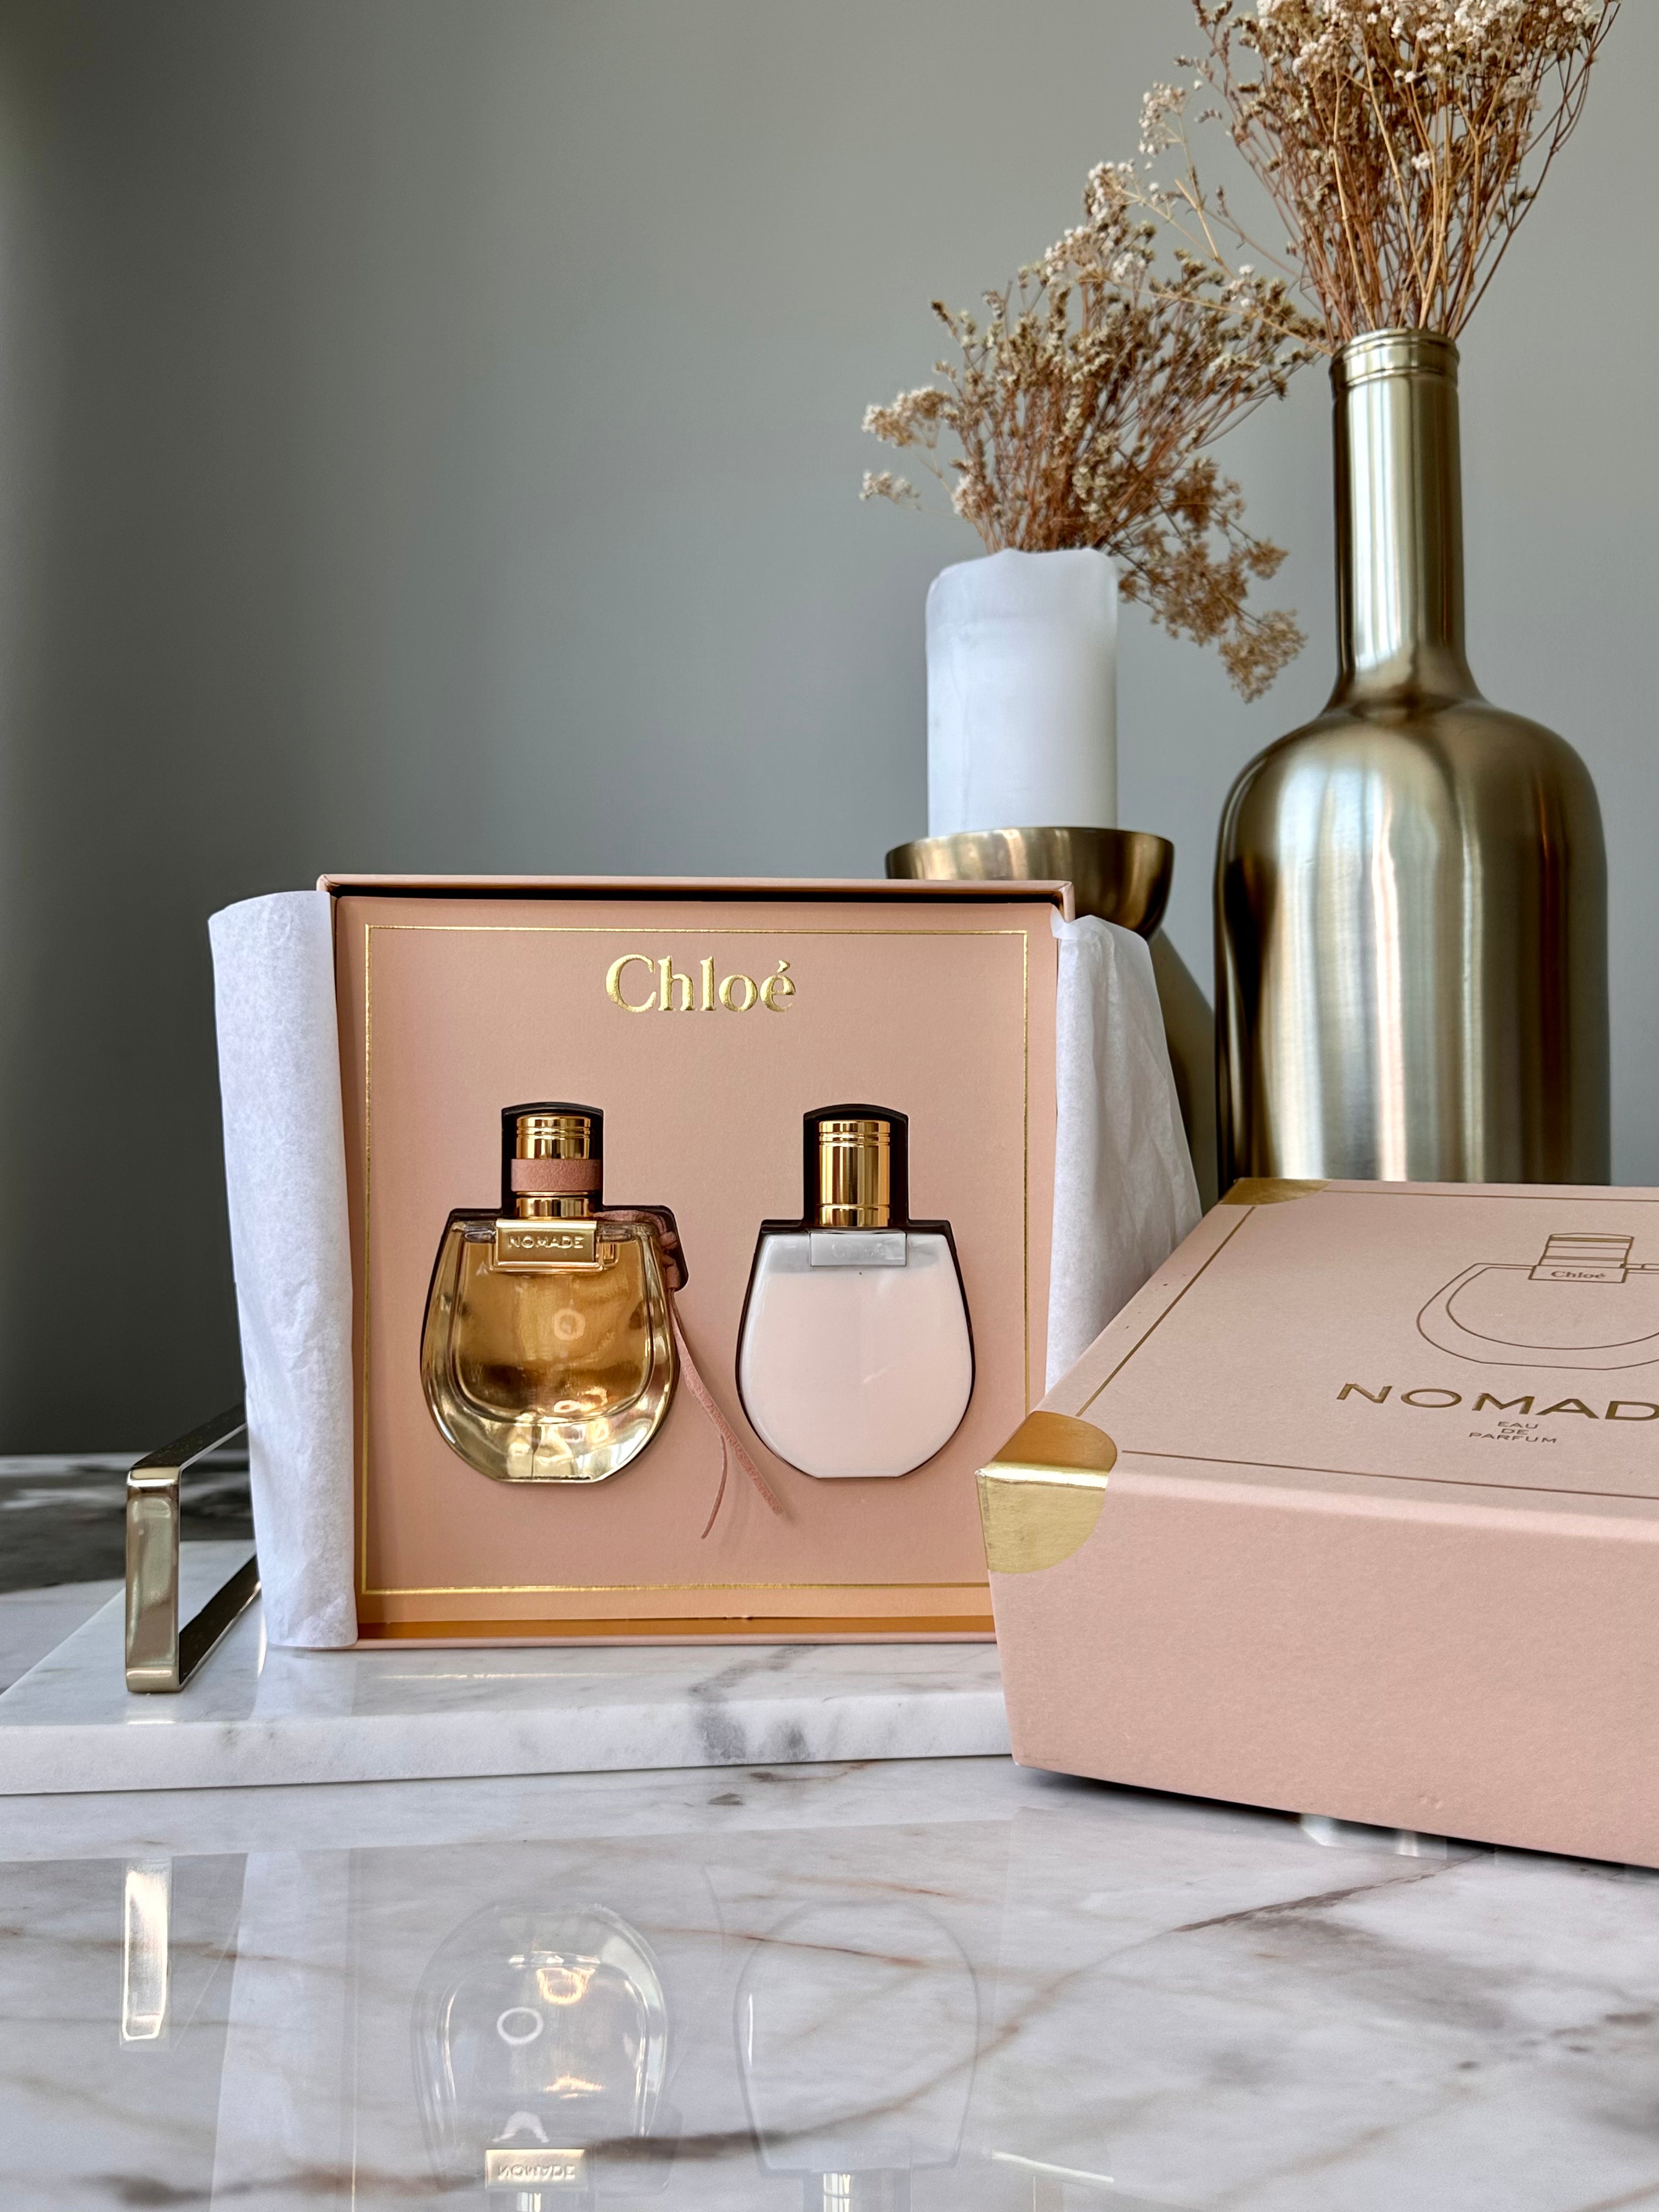 Chloe Nomade eau de perfum set (perfume 50ml - lotion 100ml)